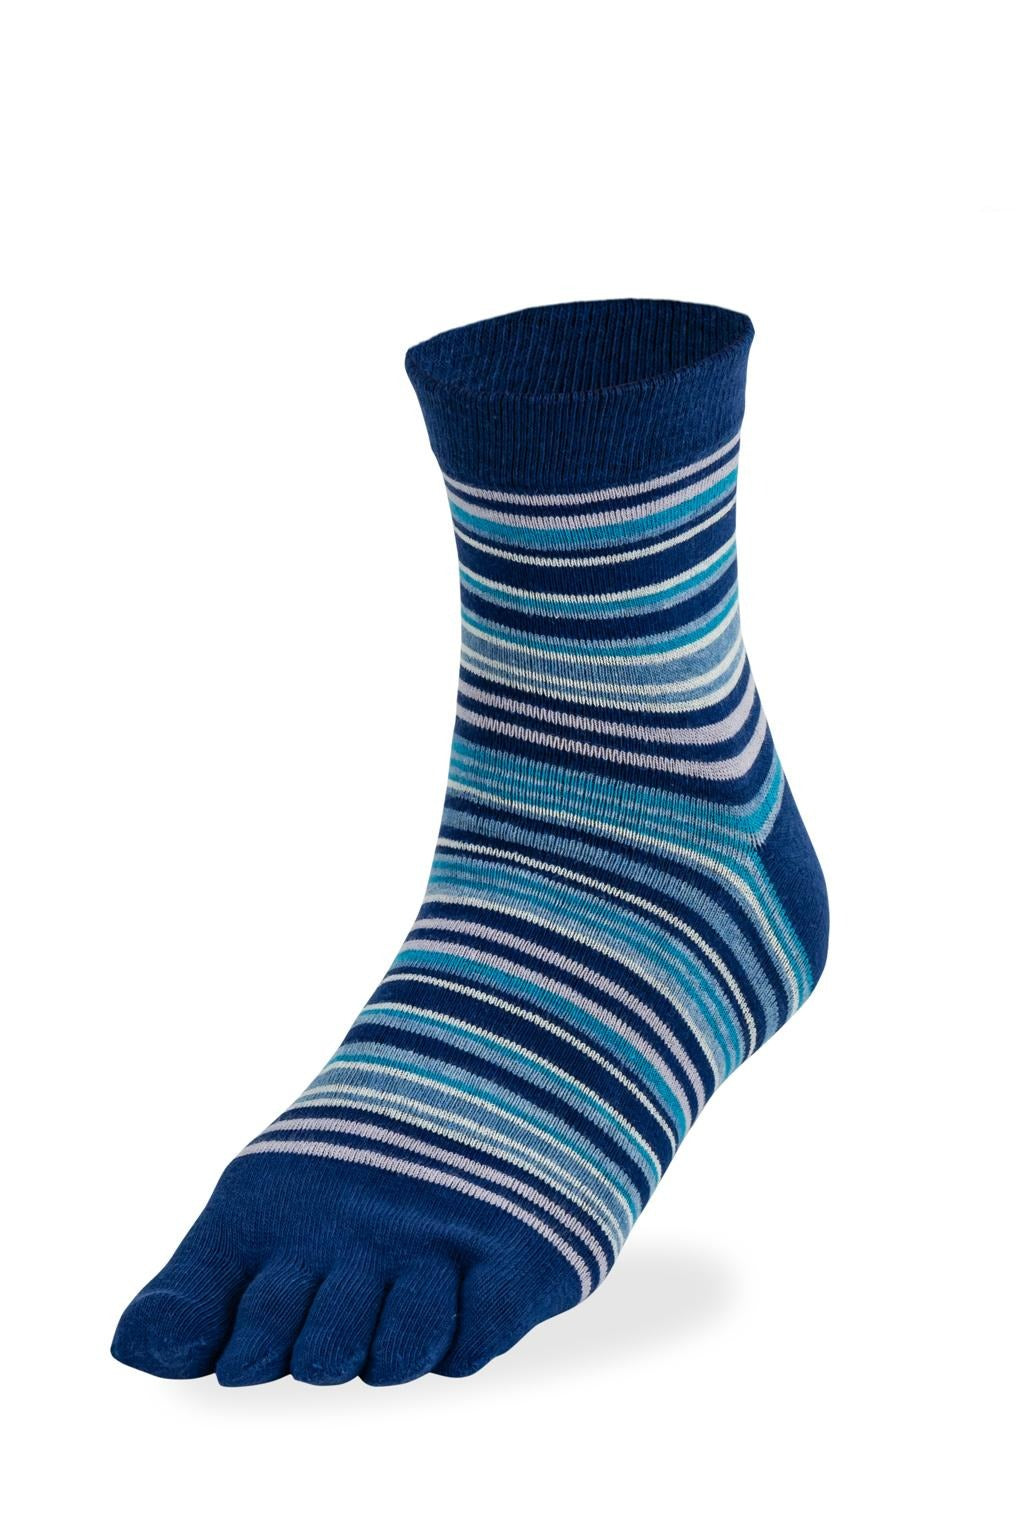 Bonnie Doon Toe Socks Funky Stripes - Men's blue and lilac horizontal stripe patterned crew length cotton mix toe socks.